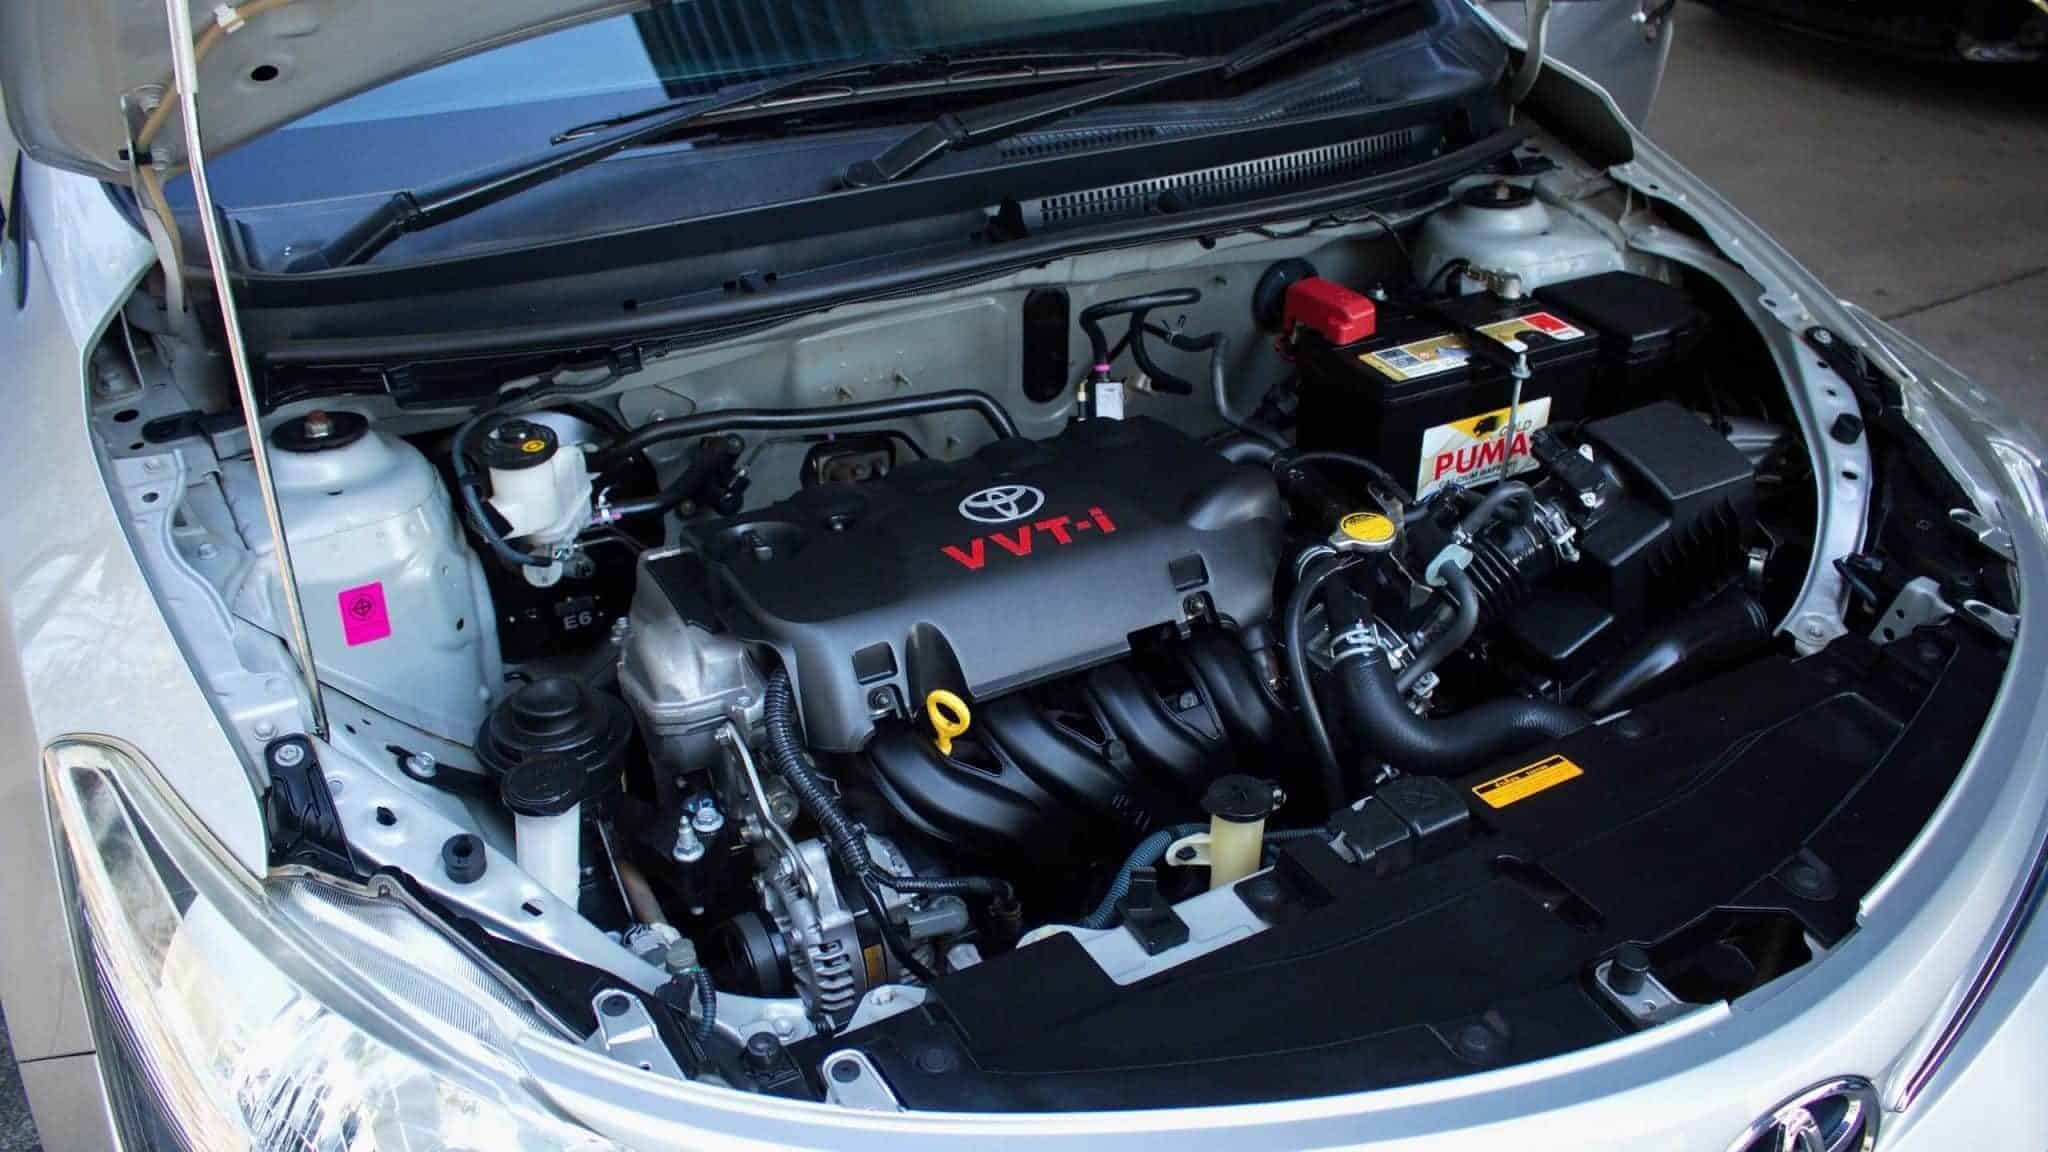 2015 (MY15) Toyota Vios  1.5 J M/T full